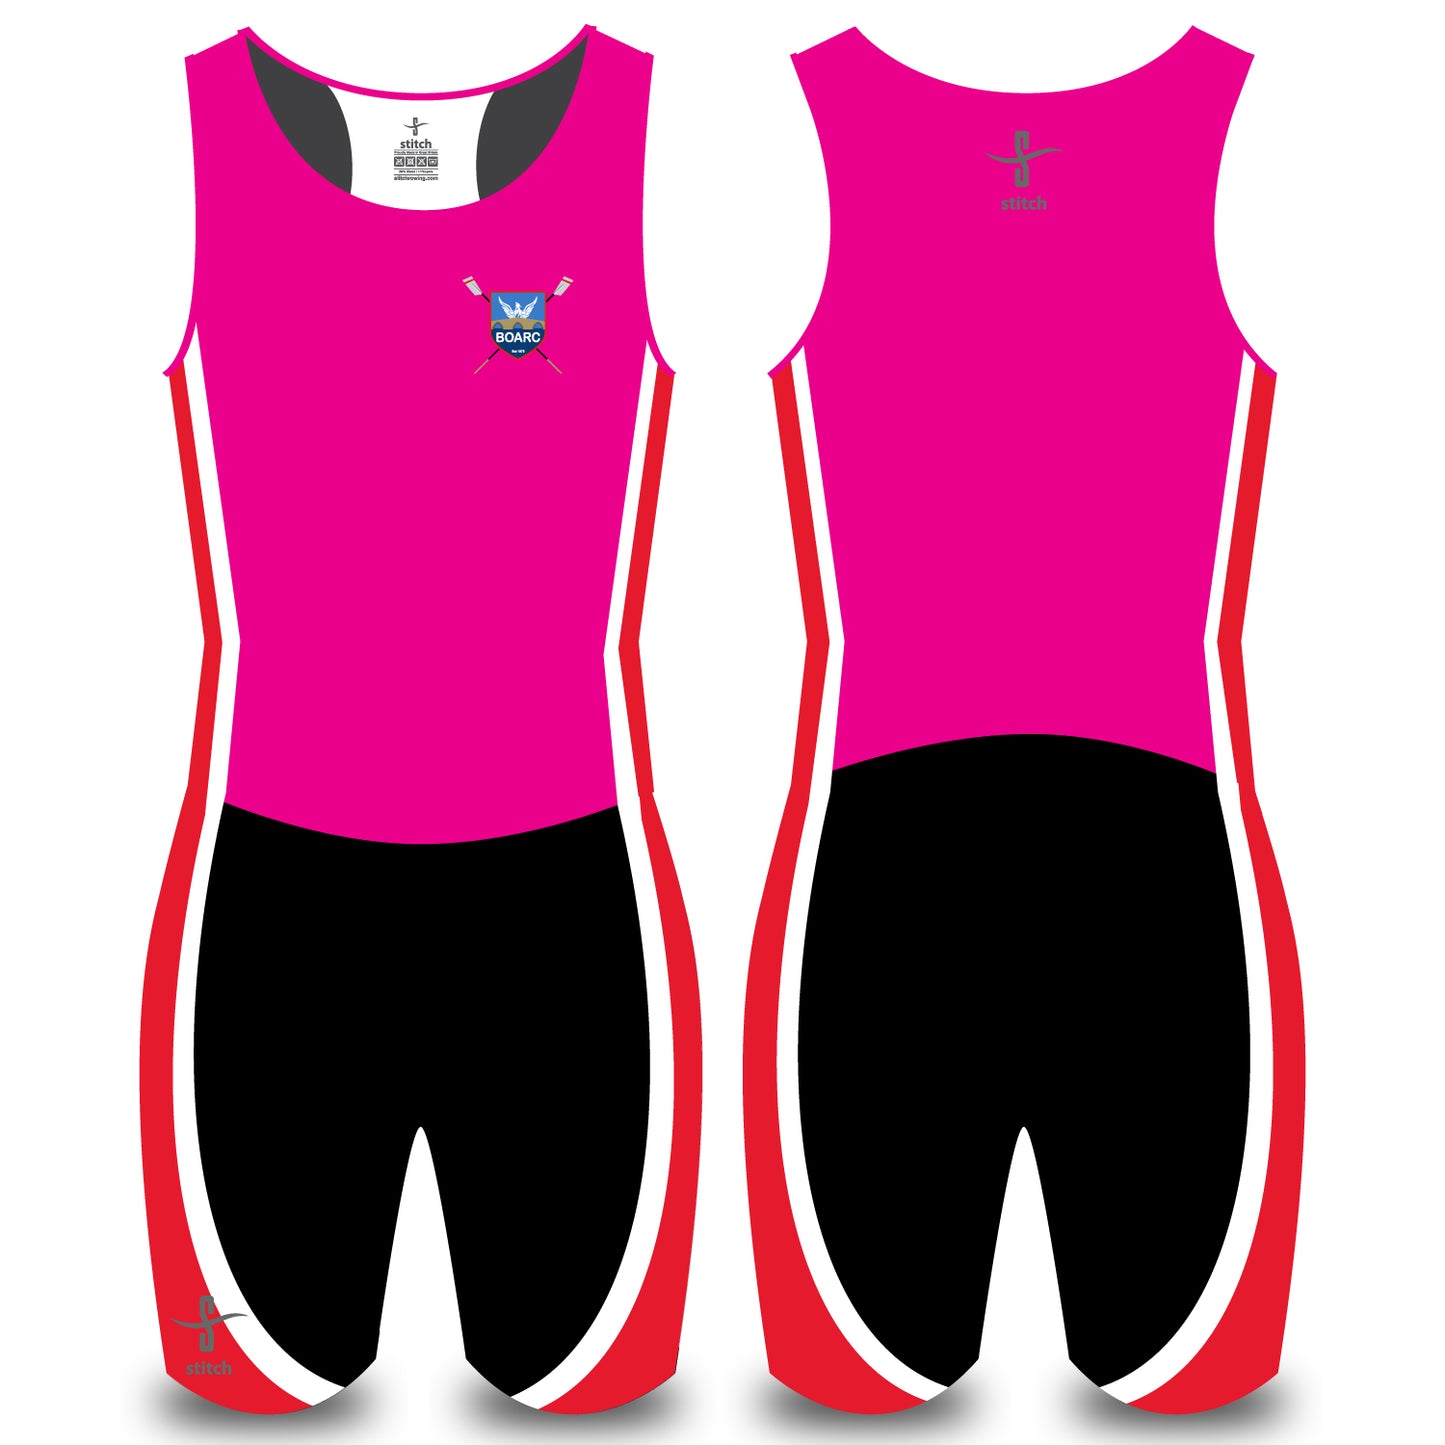 Bradford on Avon Rowing Club Fluorescent Pink AIO